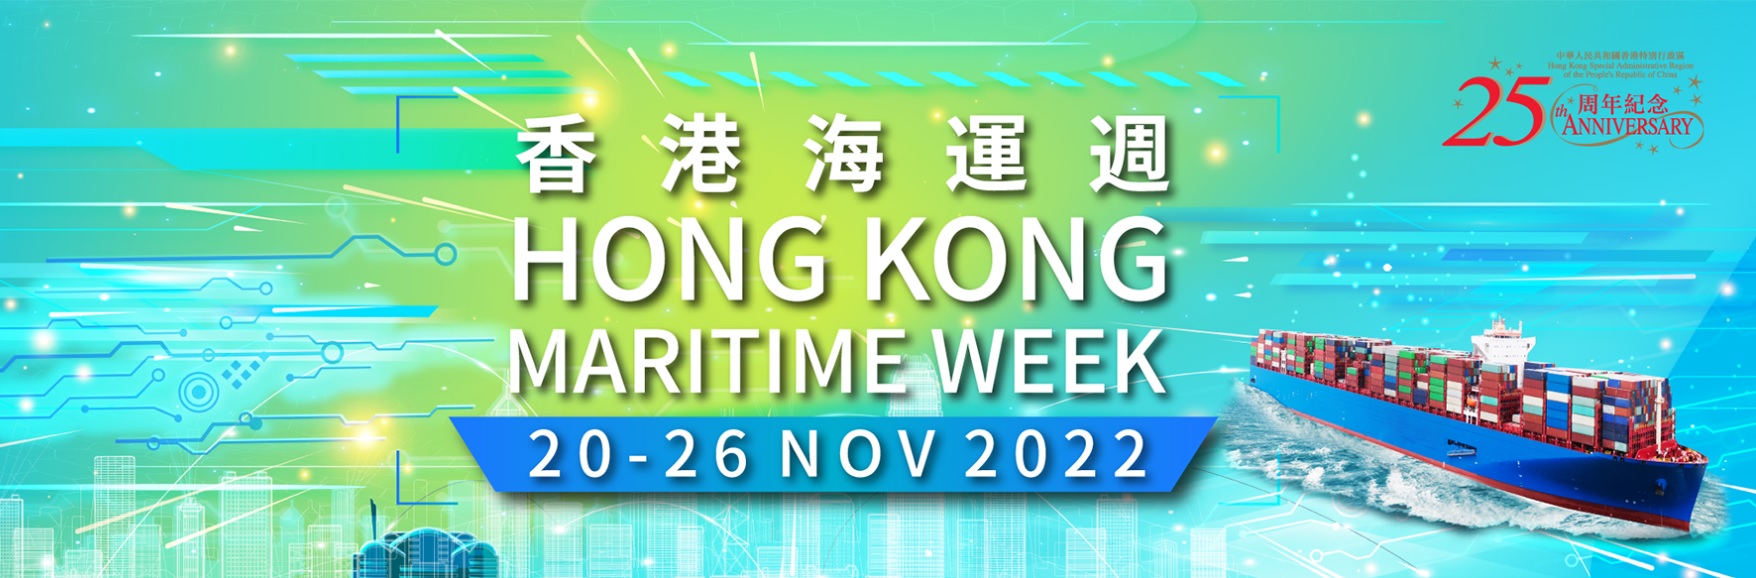 Hong Kong Maritime Week